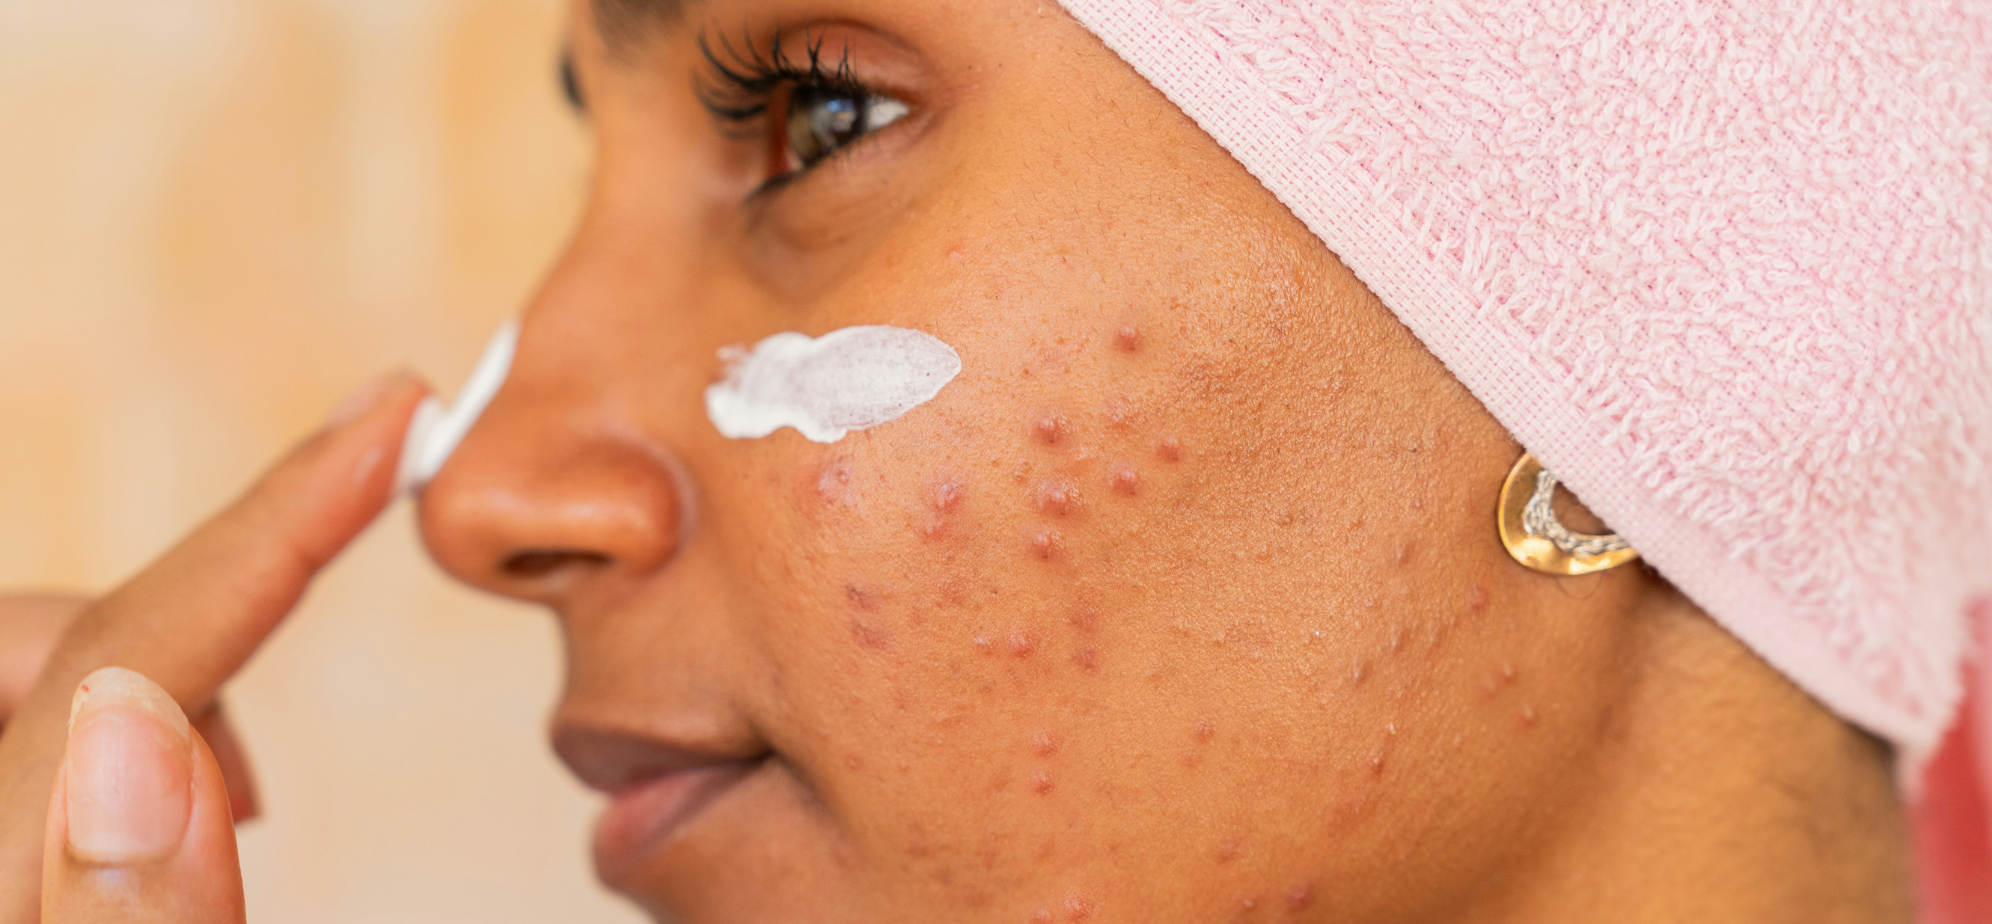 Woman with acne putting moisturiser on